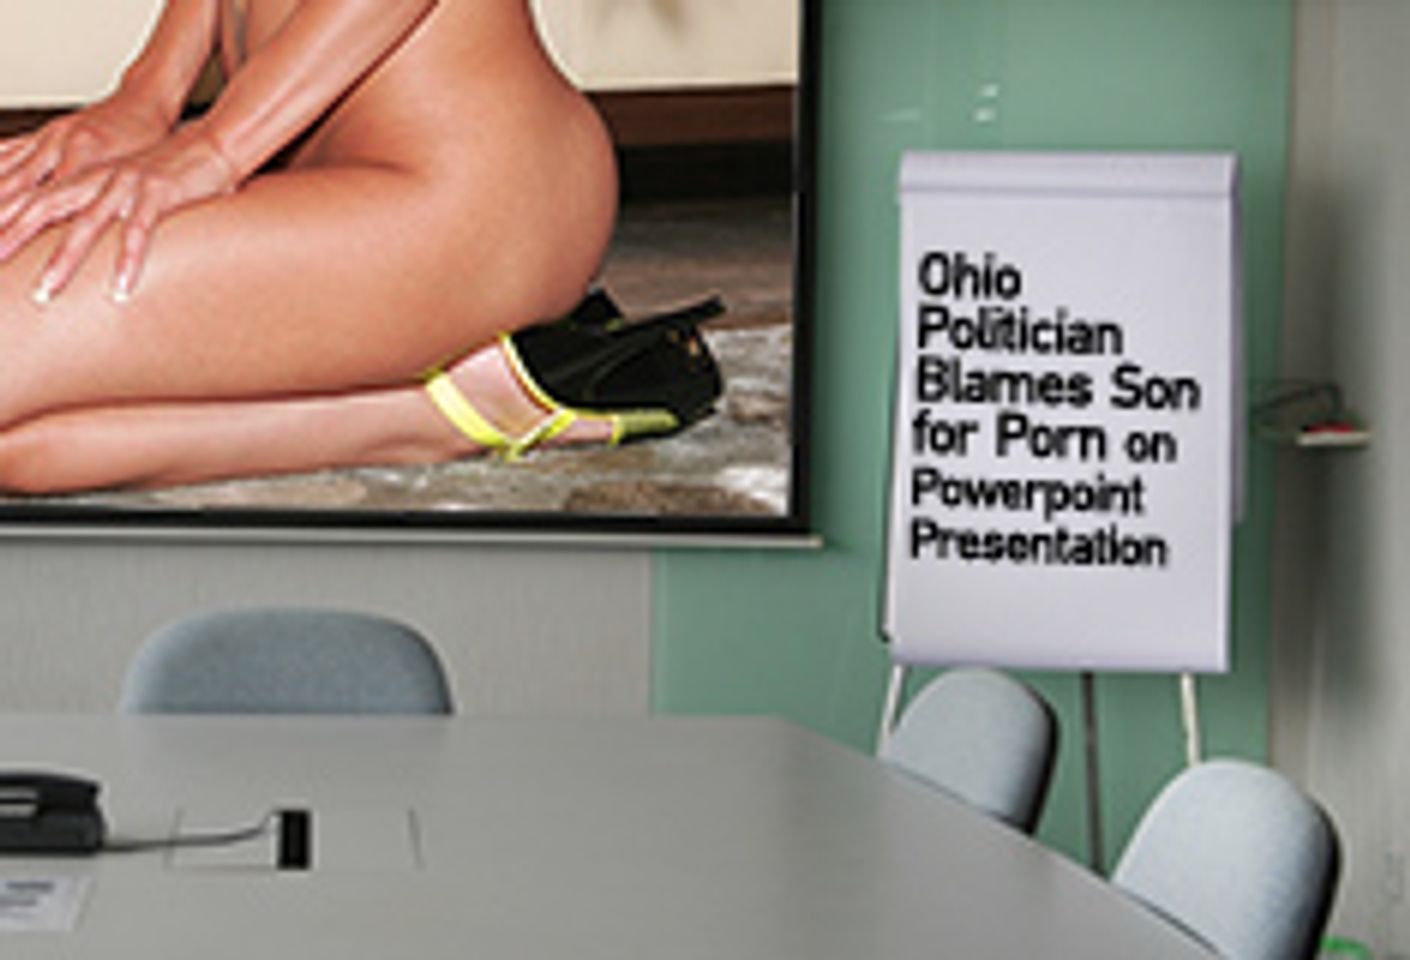 Ohio Politician Blames Son for Porn on Powerpoint Presentation